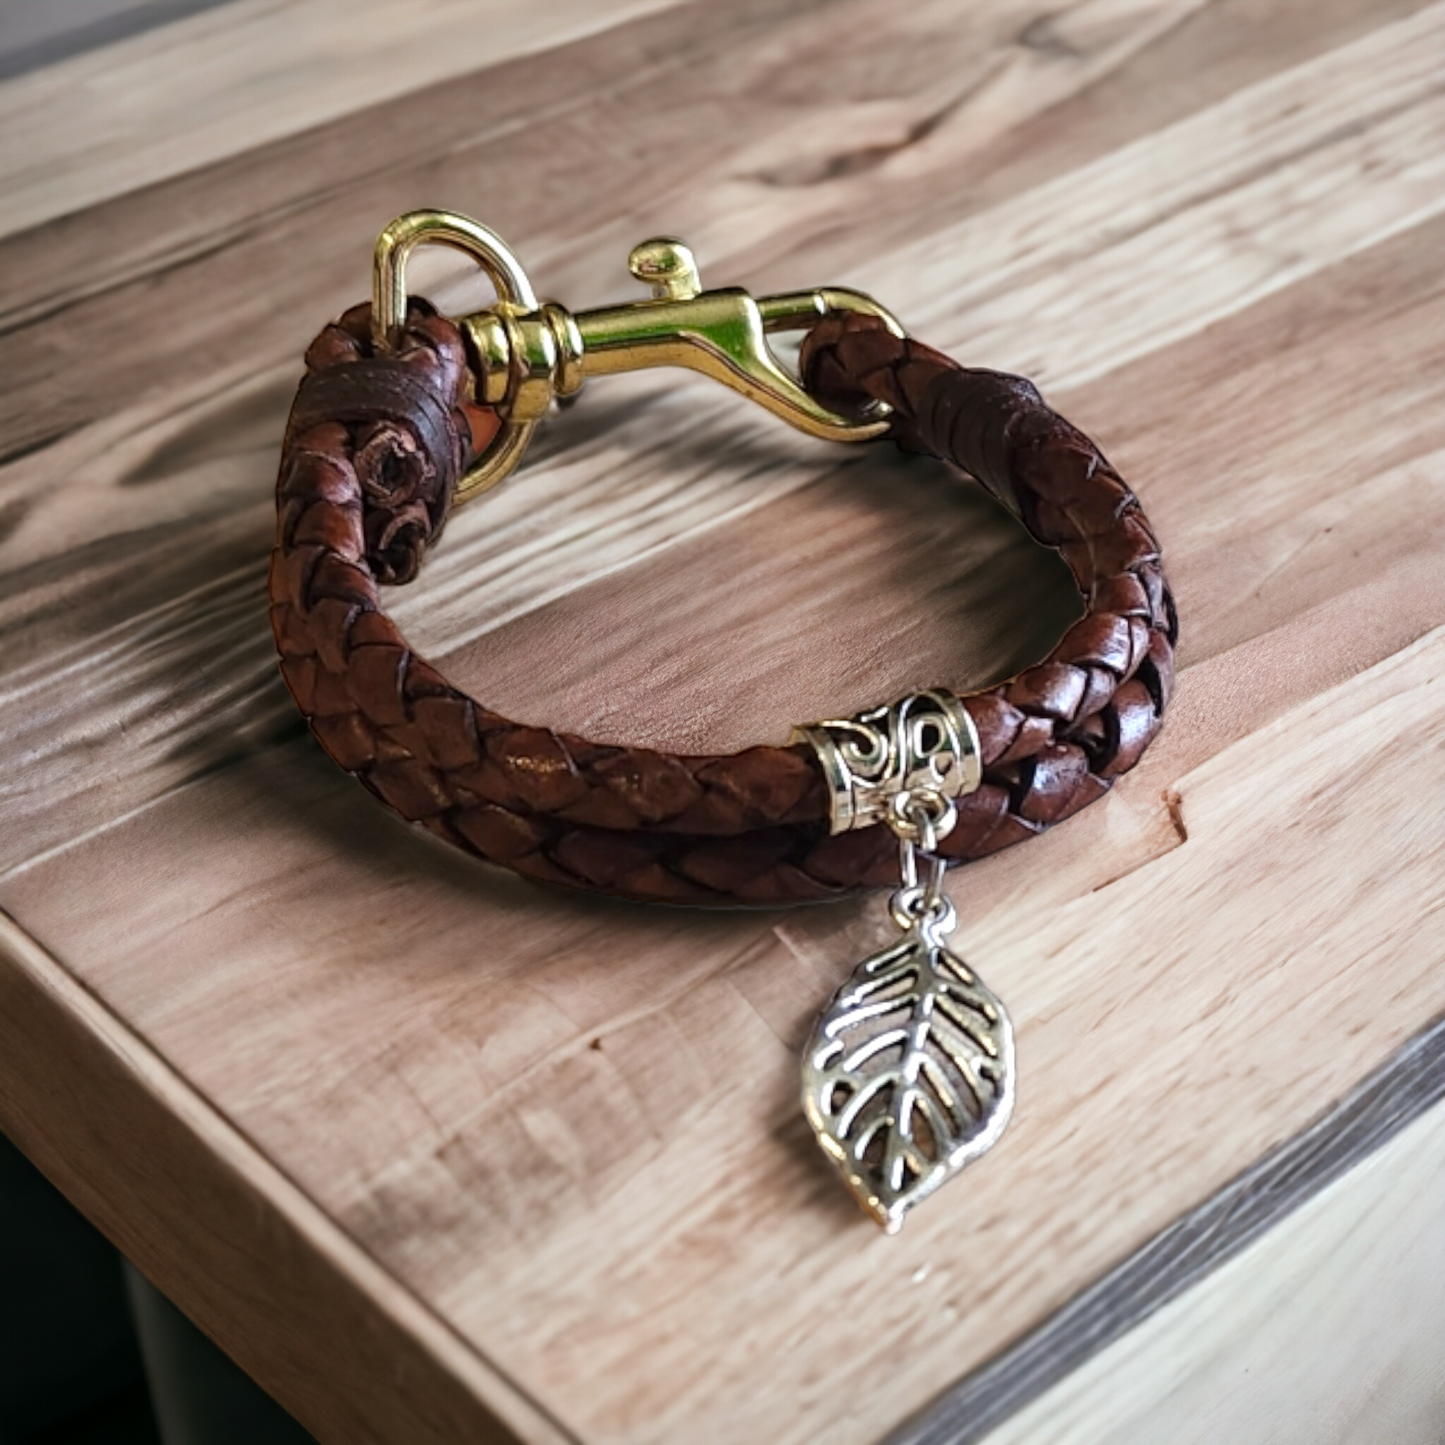 Leaf braided leather bracelet